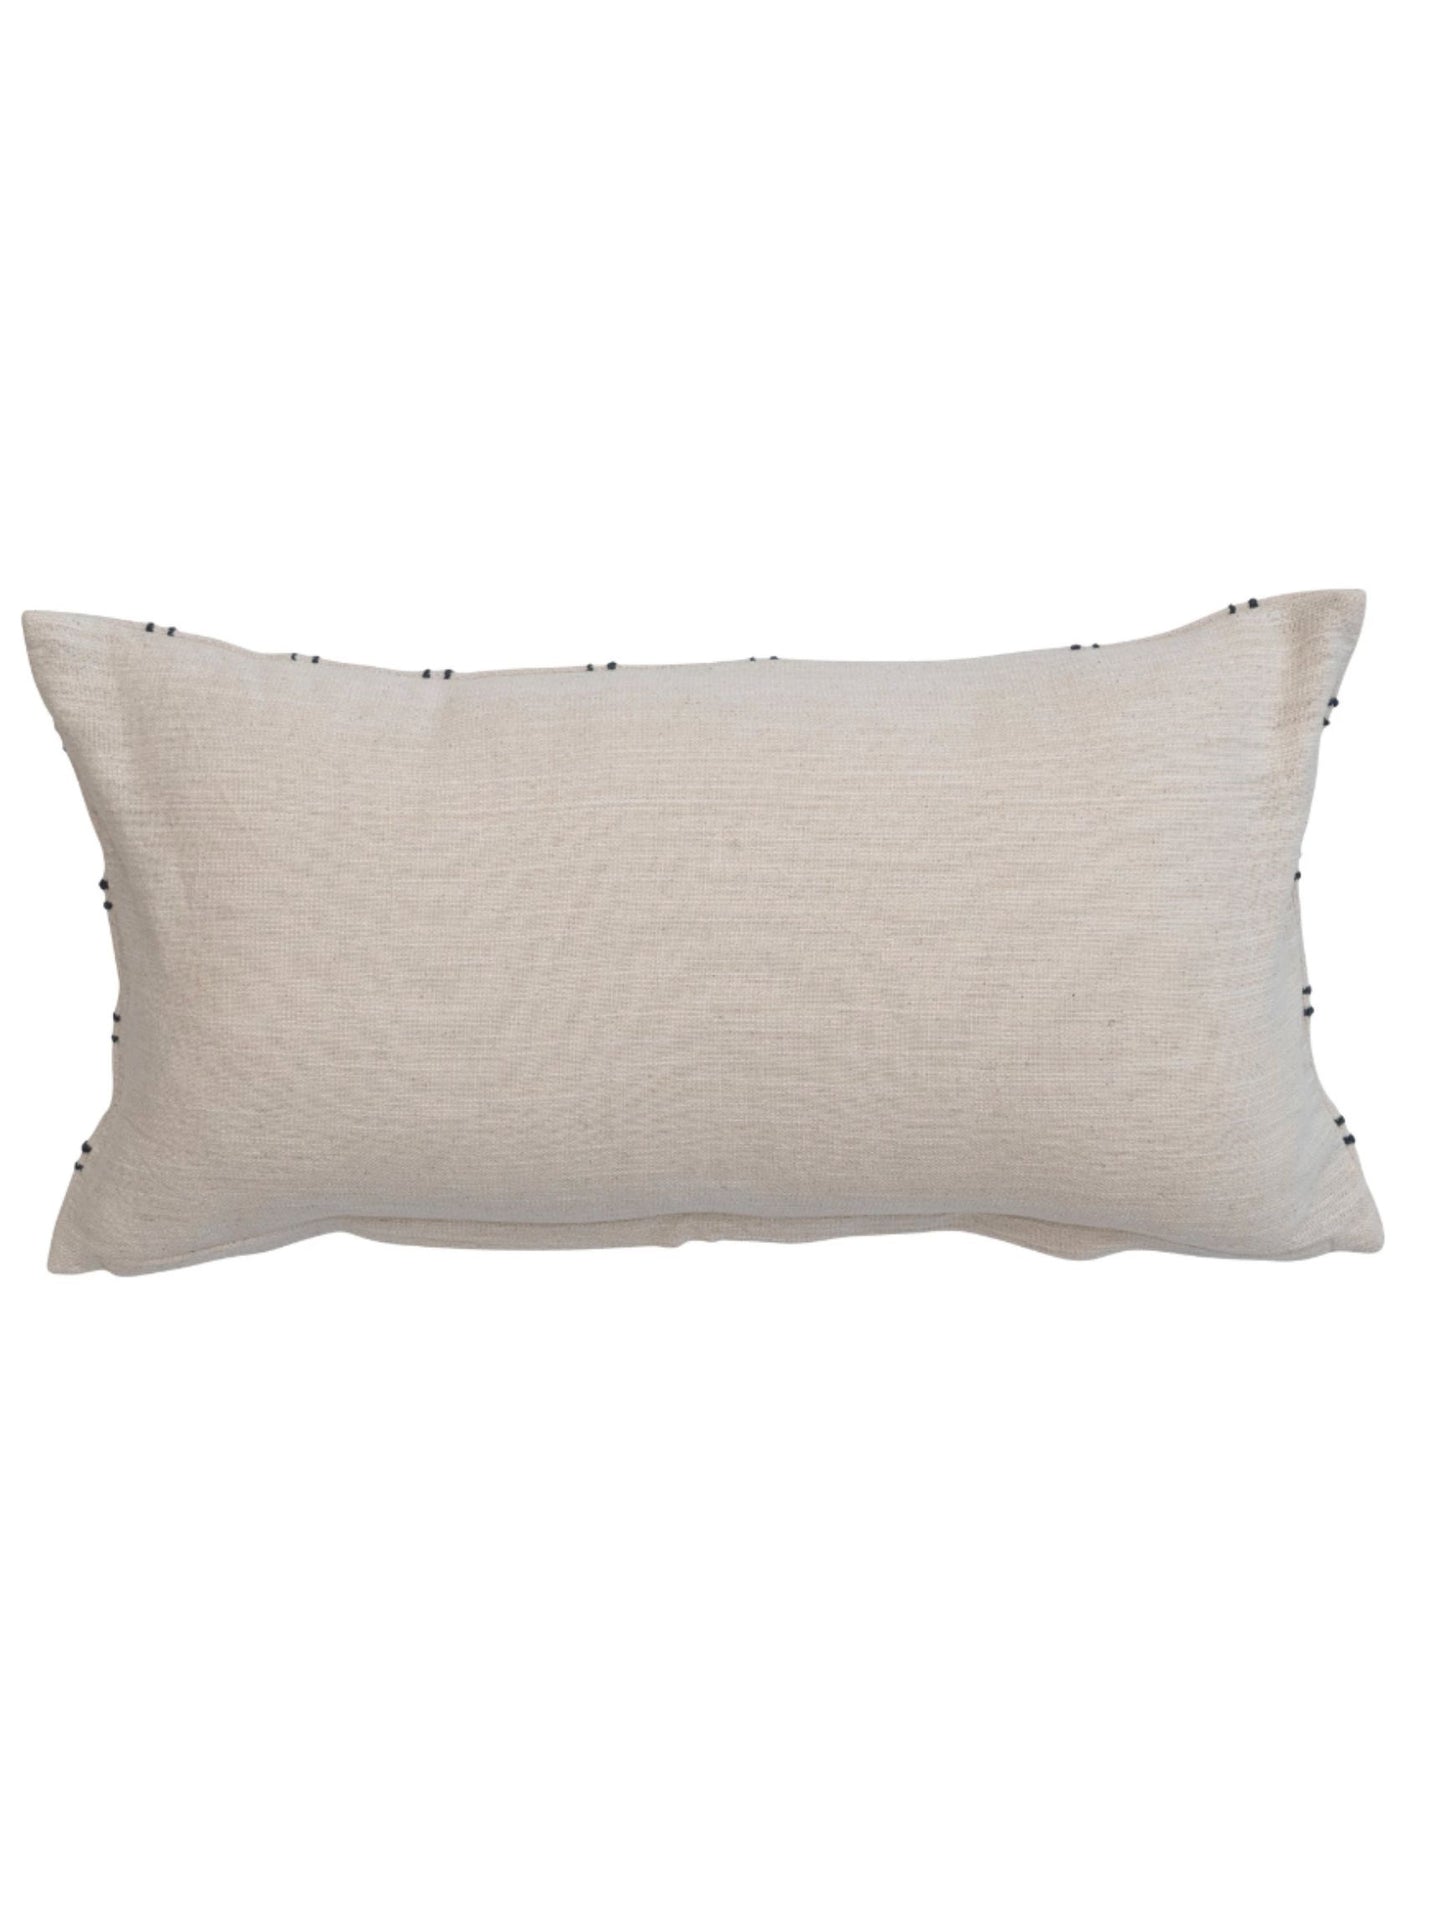 Cotton Slub Embroidered Lumbar Pillow w/ Grid Pattern